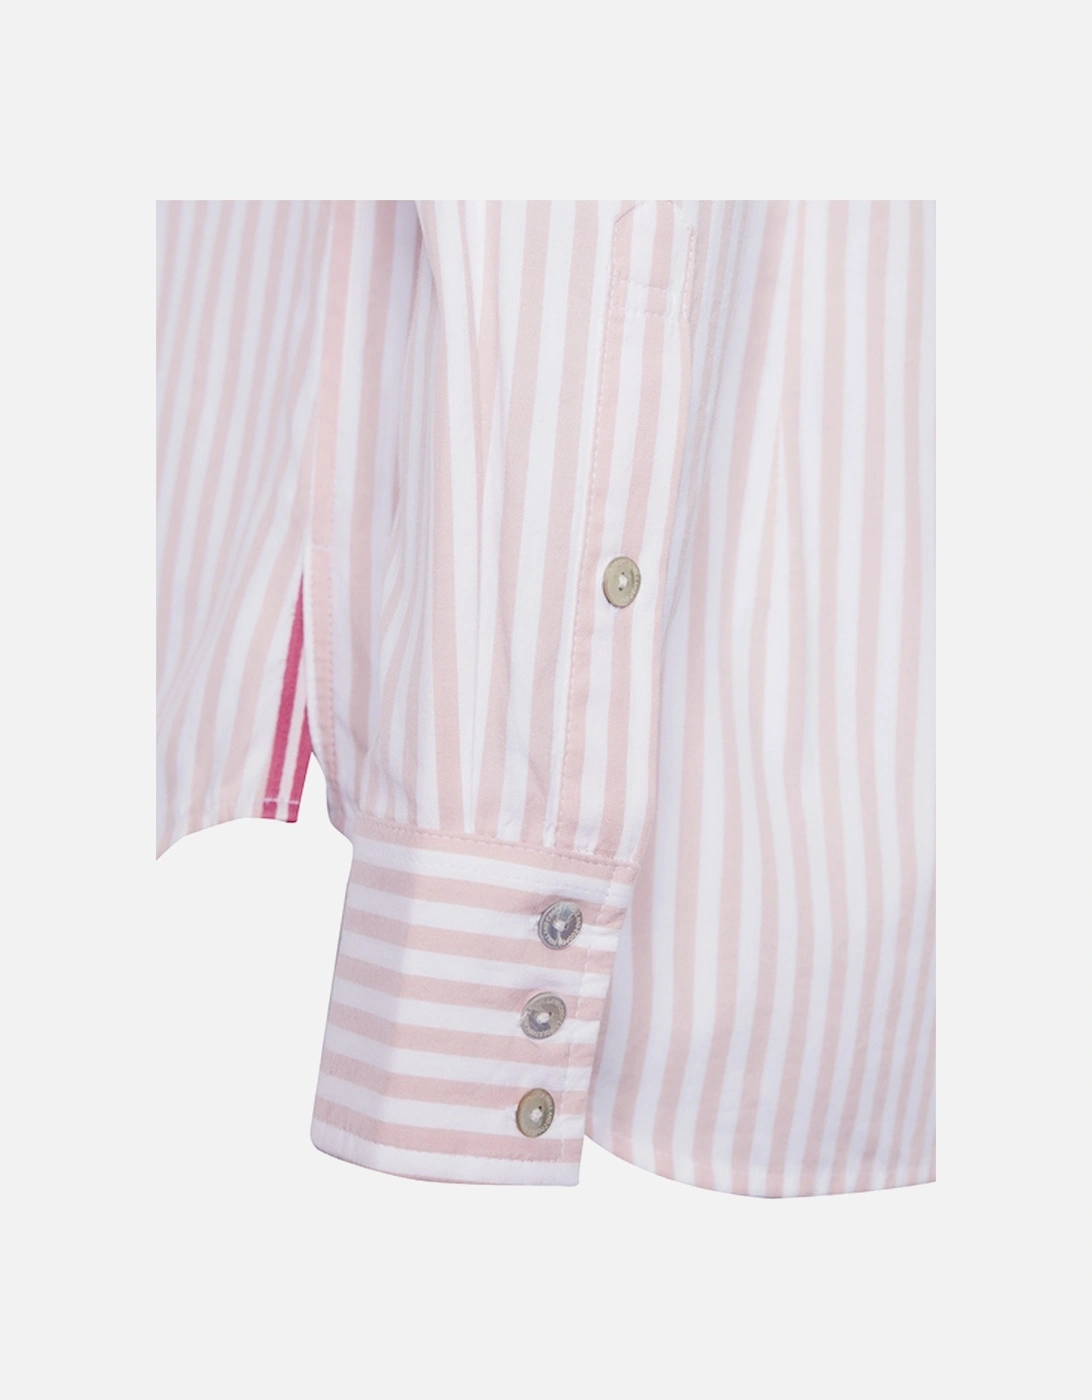 Classic Button Down Shirt Pink Stripe